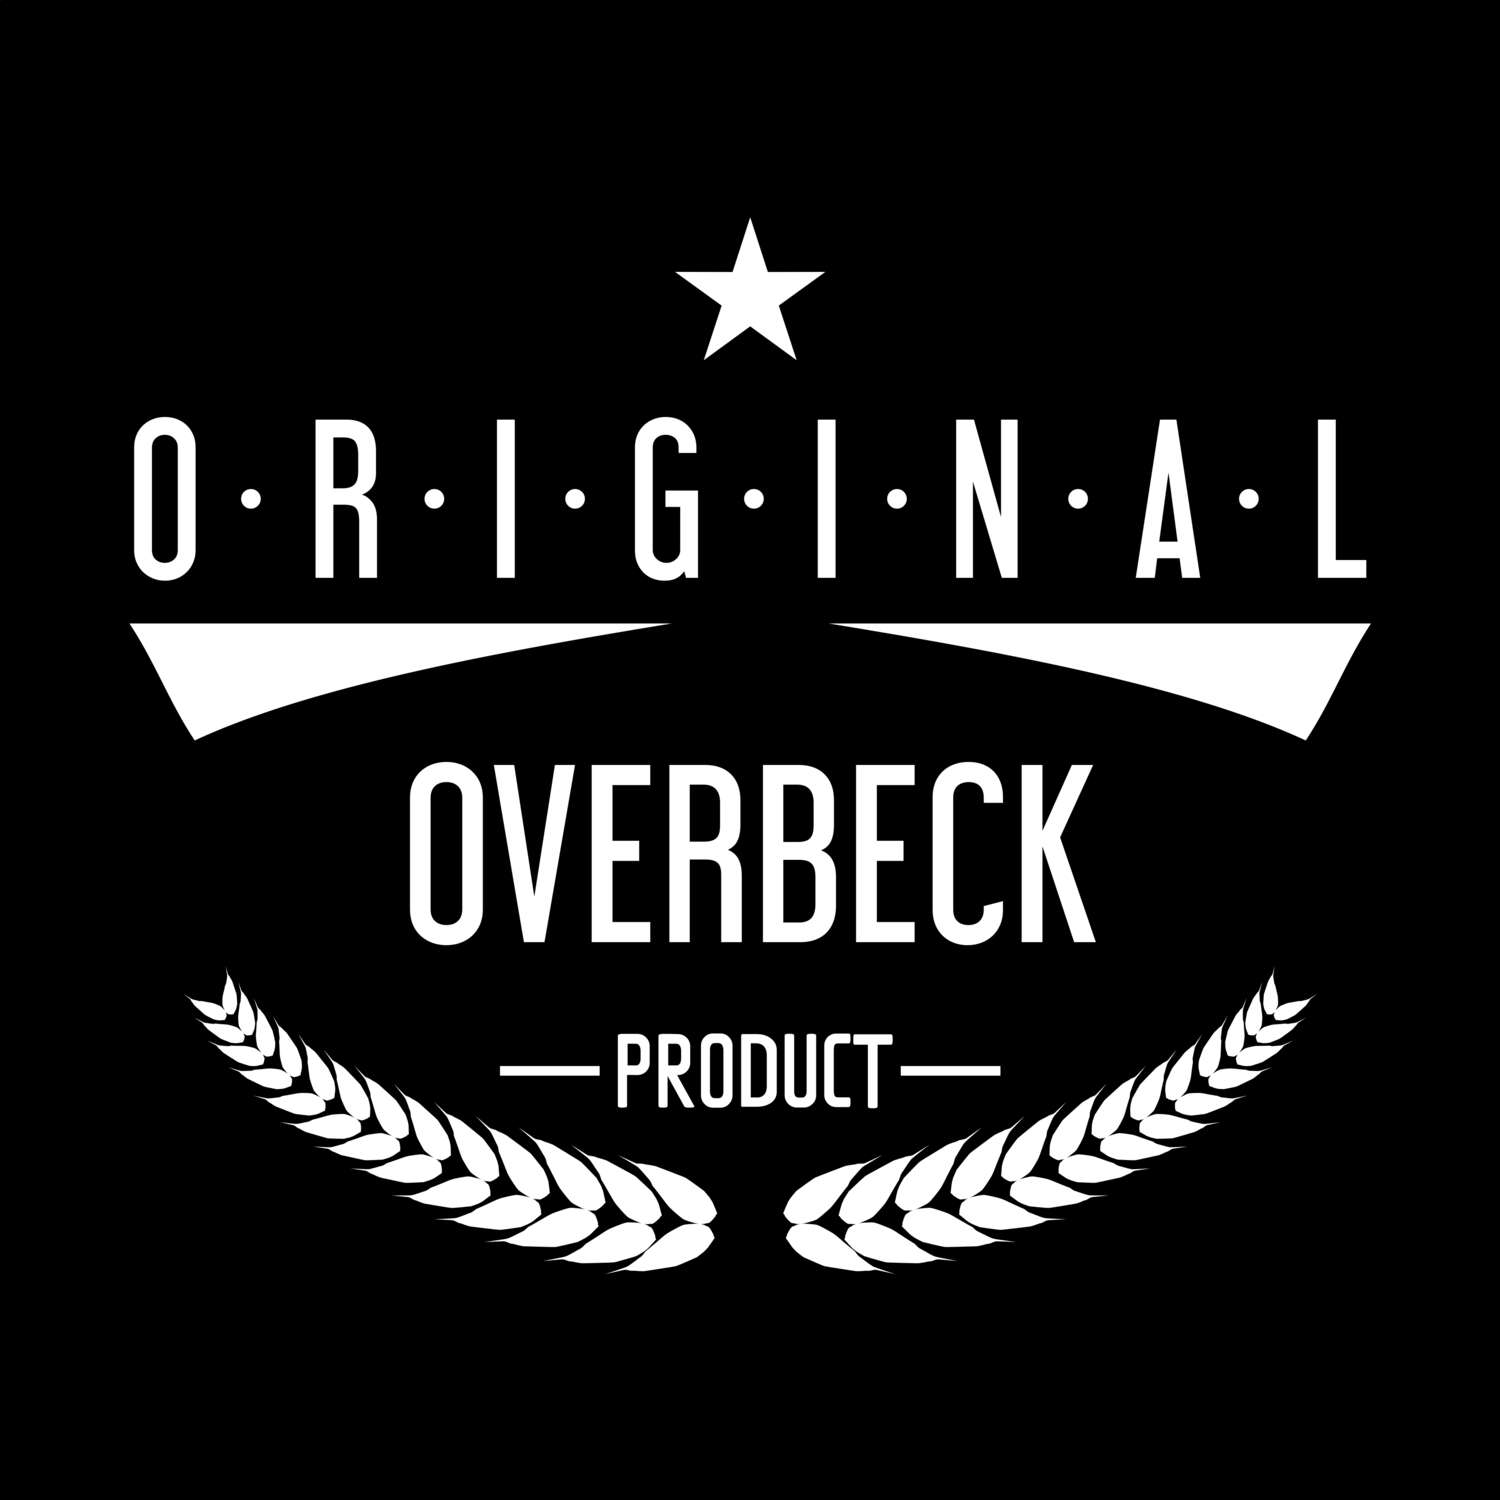 Overbeck T-Shirt »Original Product«